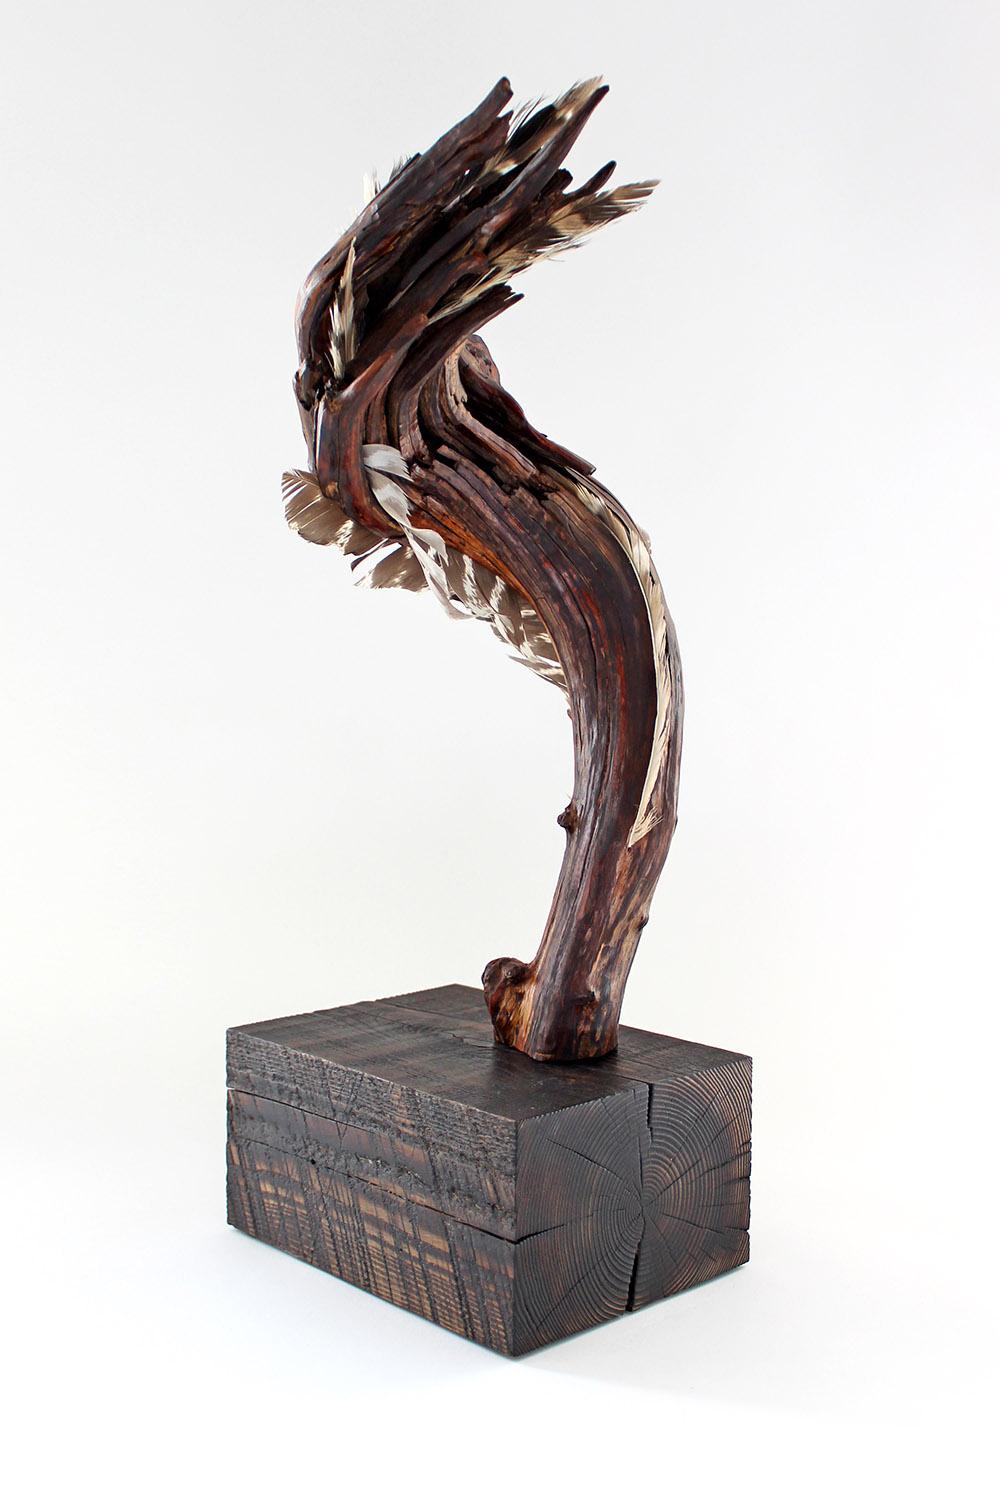 "Ascending Flourish", sculpture, wood, mountain laurel, feather, browns, reds - Sculpture by Miller Opie